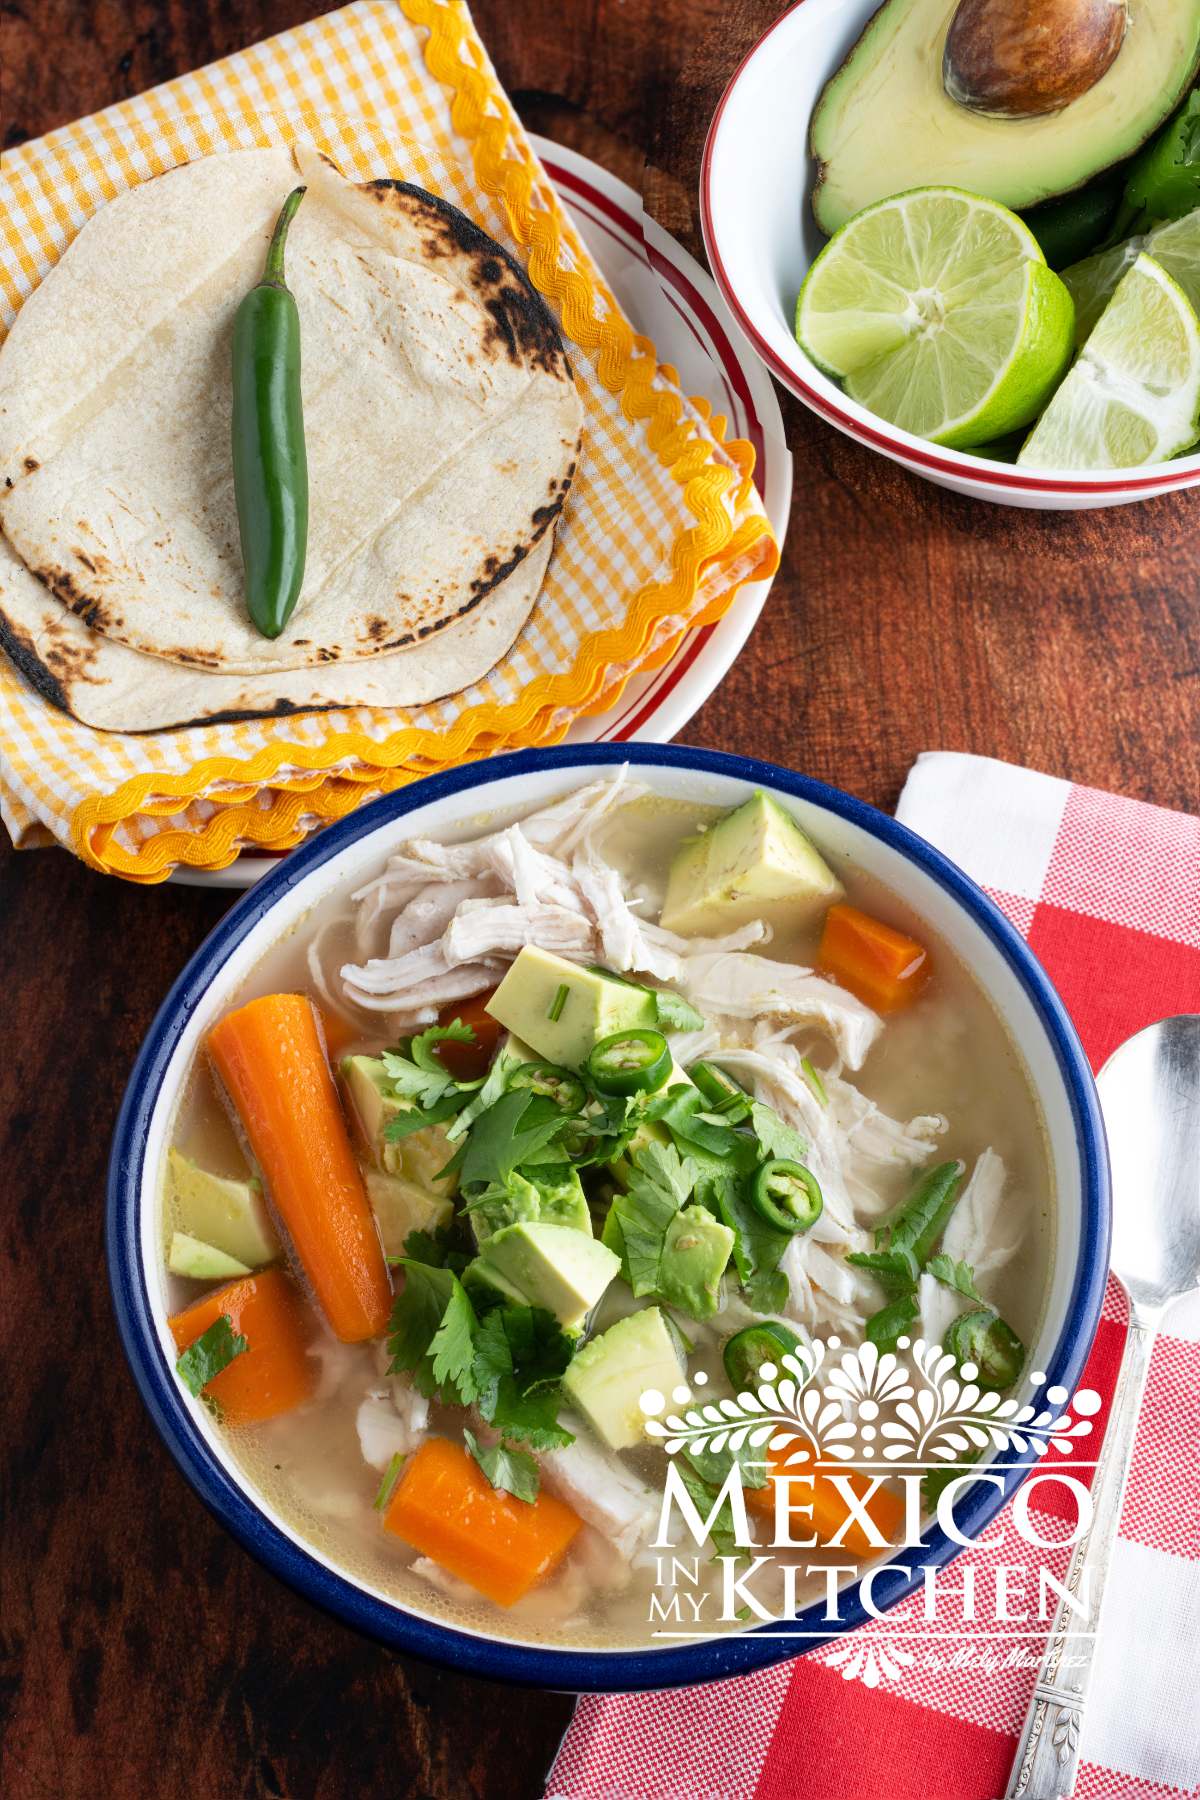 Caldo de Pollo (Mexican chicken soup) served in a white bowl, next to another bowl with avocado, cilantro and limes.